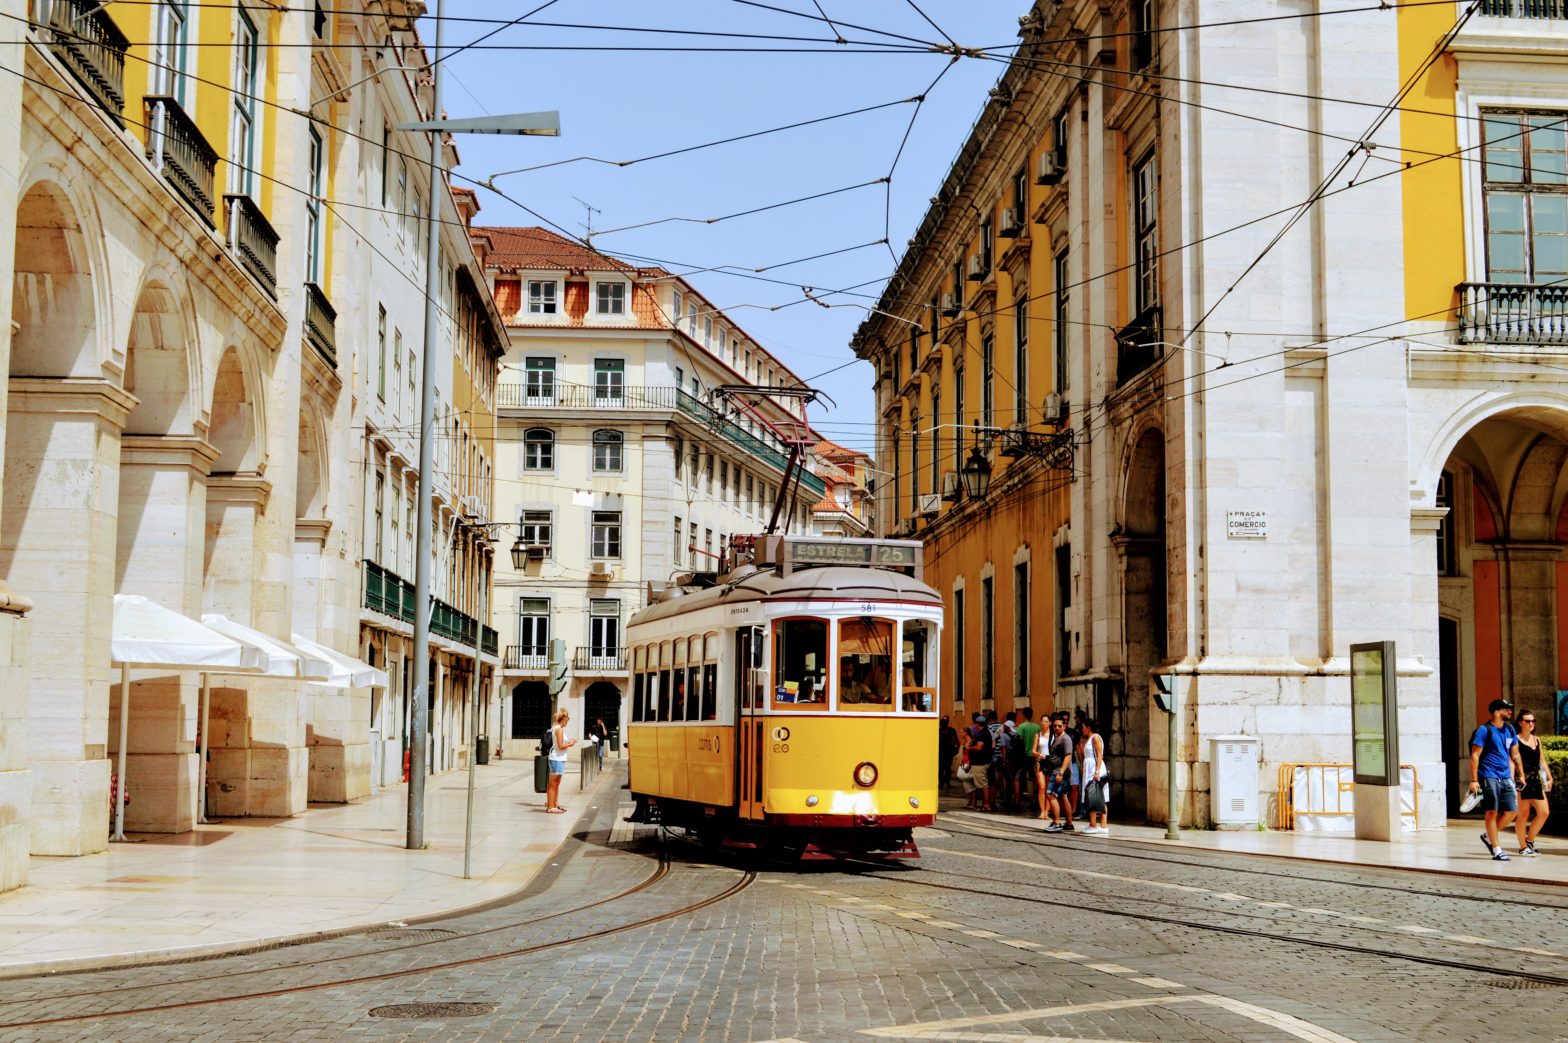 Traveler's Guide To Spending One Day in Lisbon